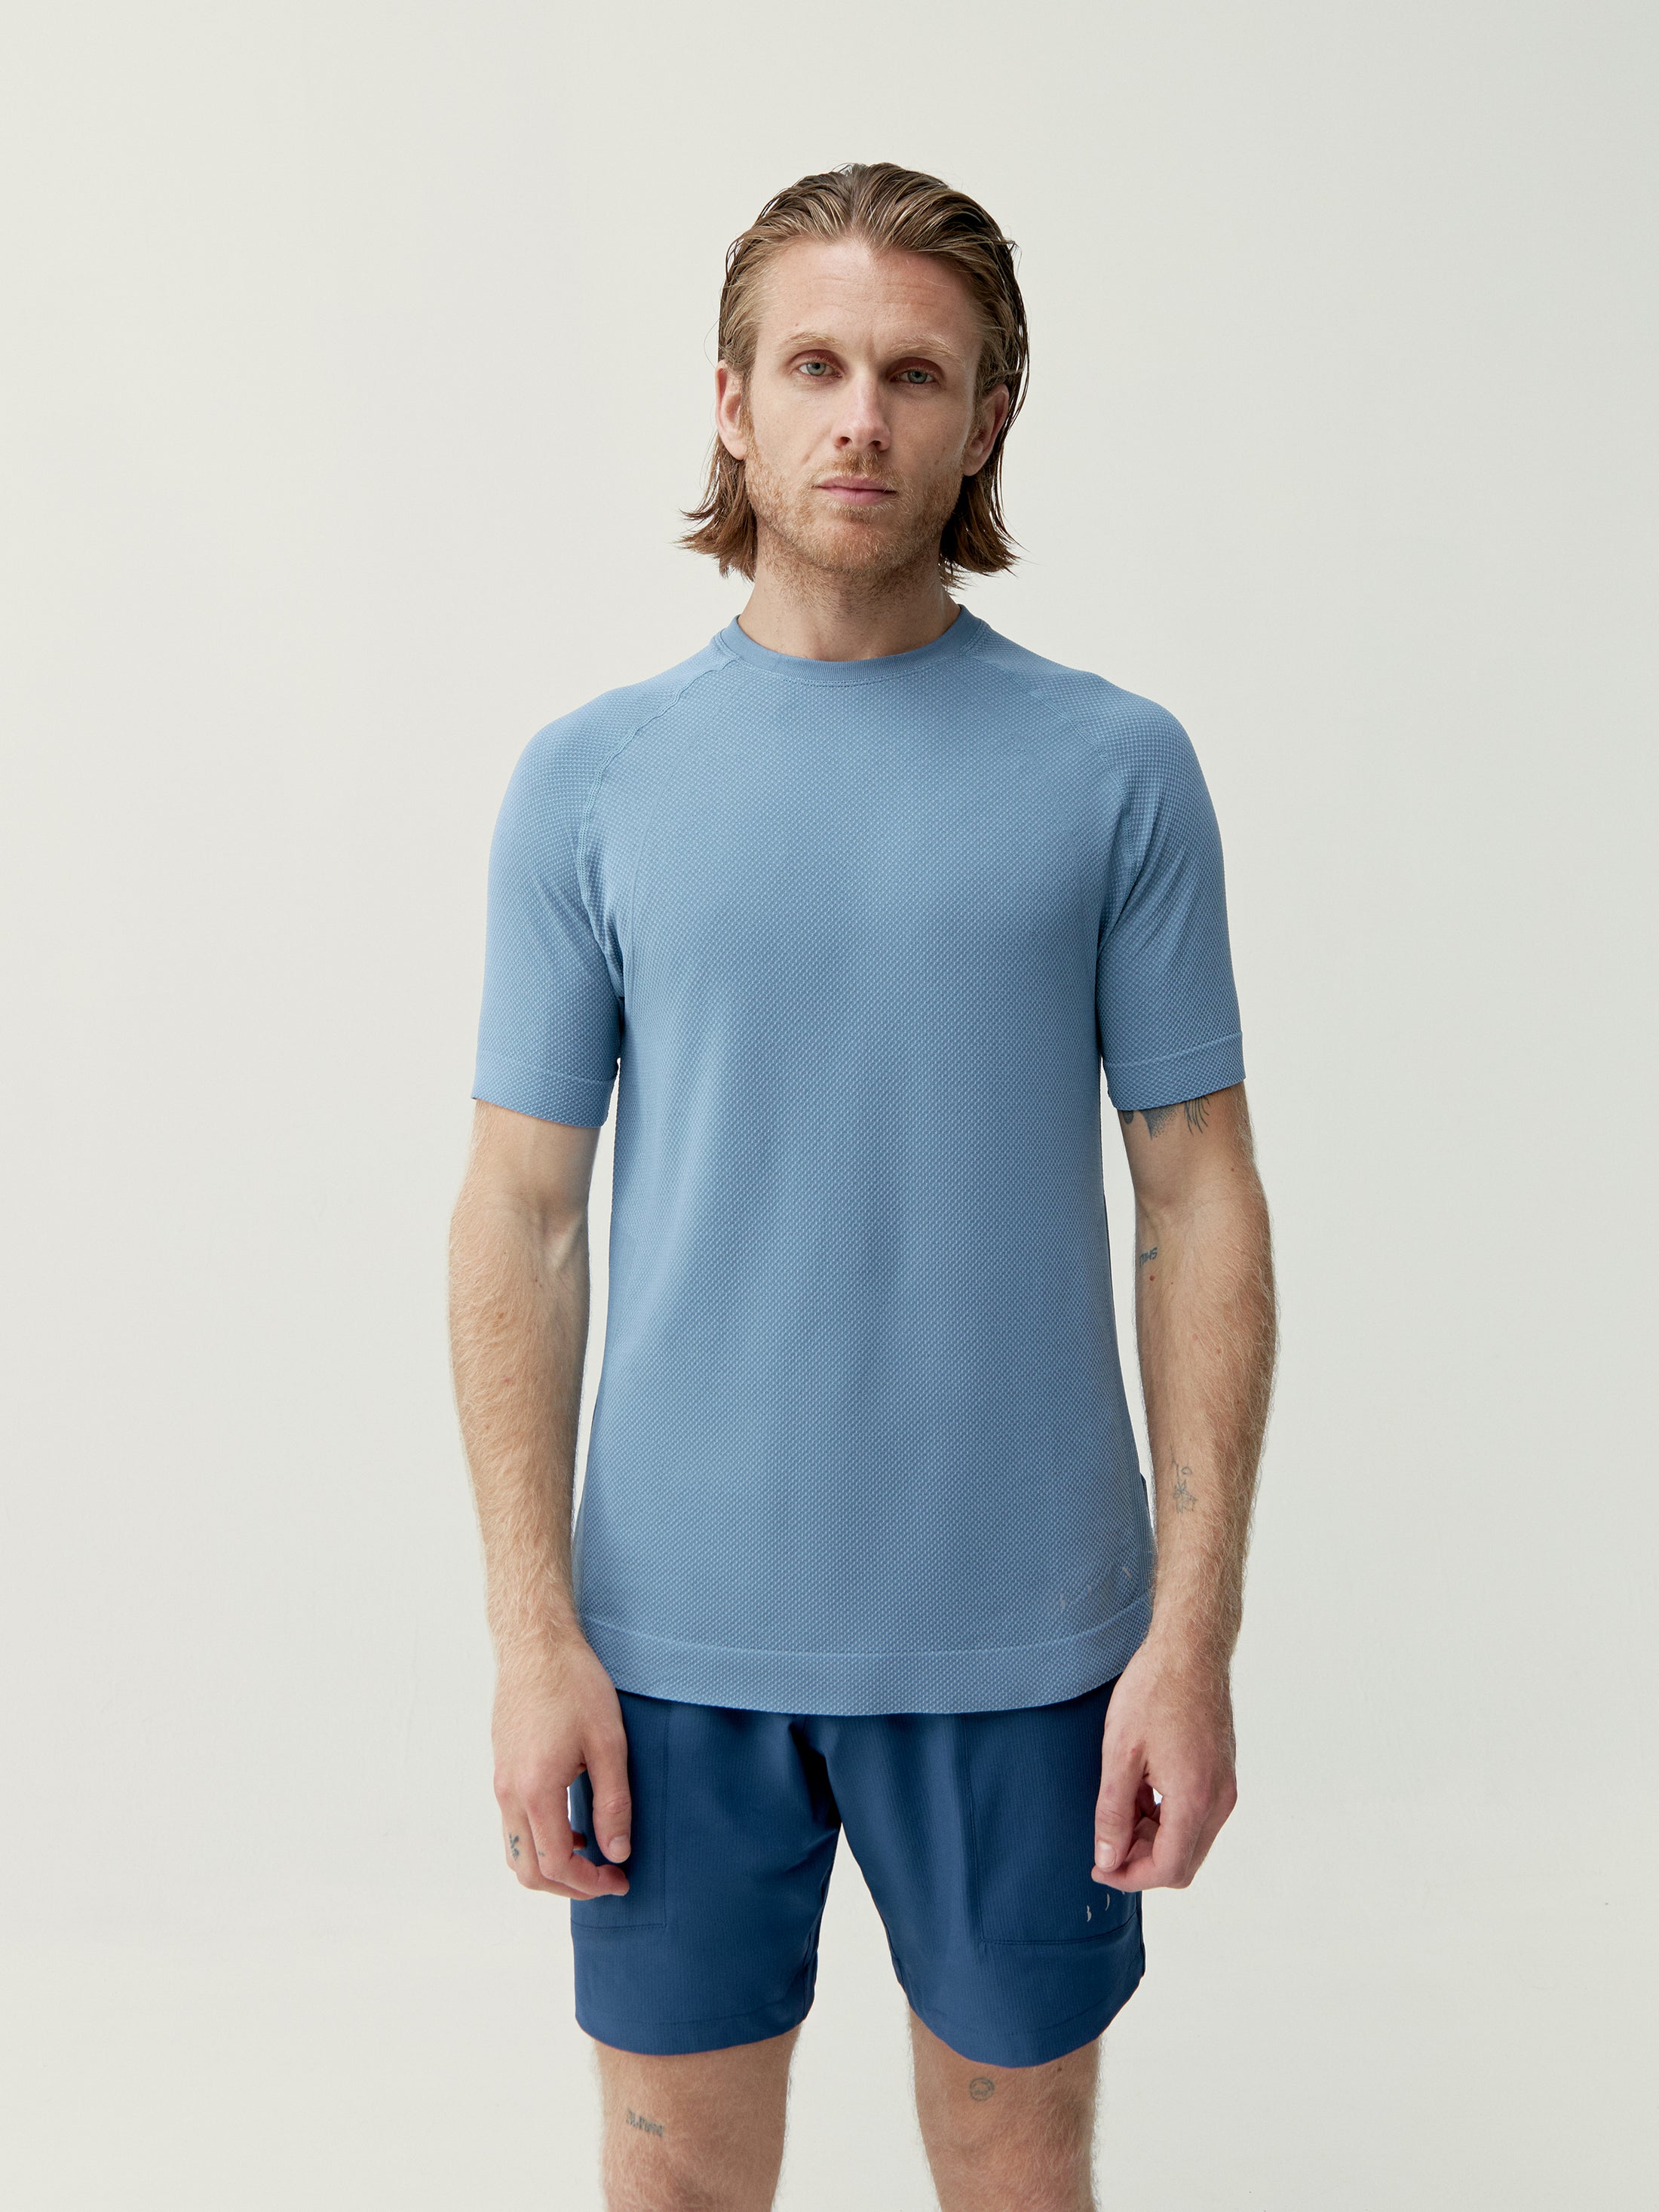 Otawa T-Shirt in Citadel Blue